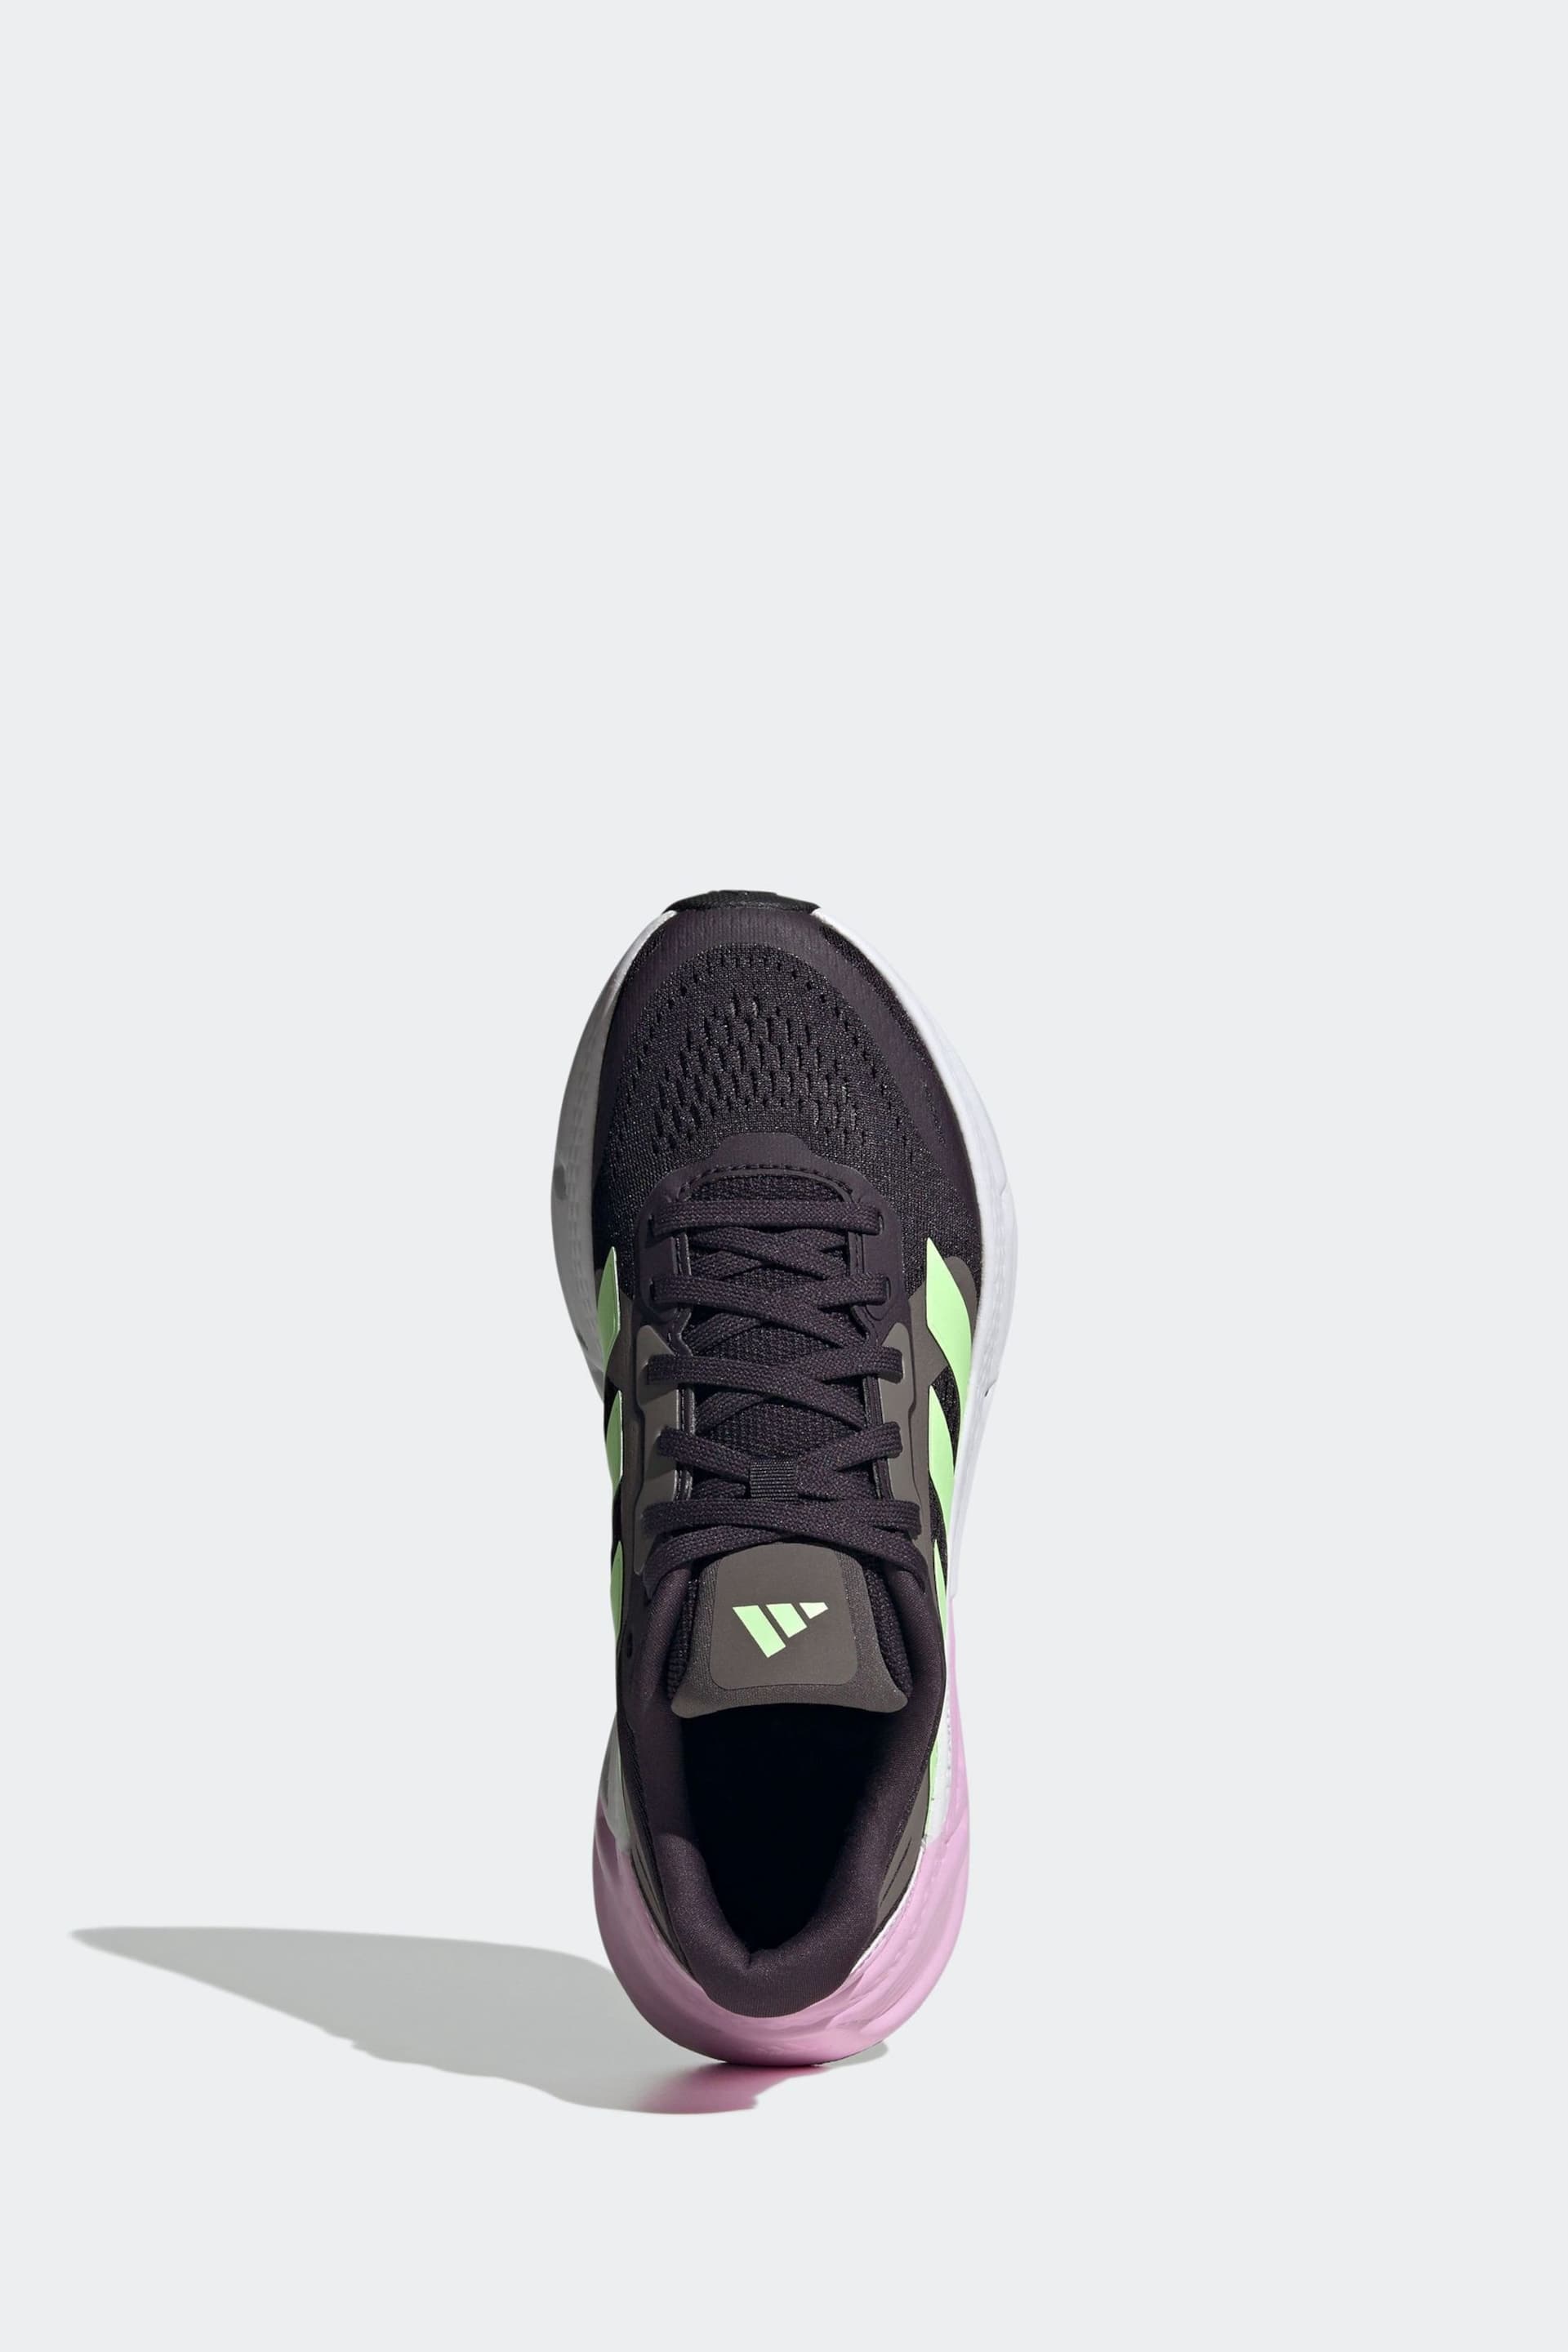 adidas Purple Questar Trainers - Image 5 of 8